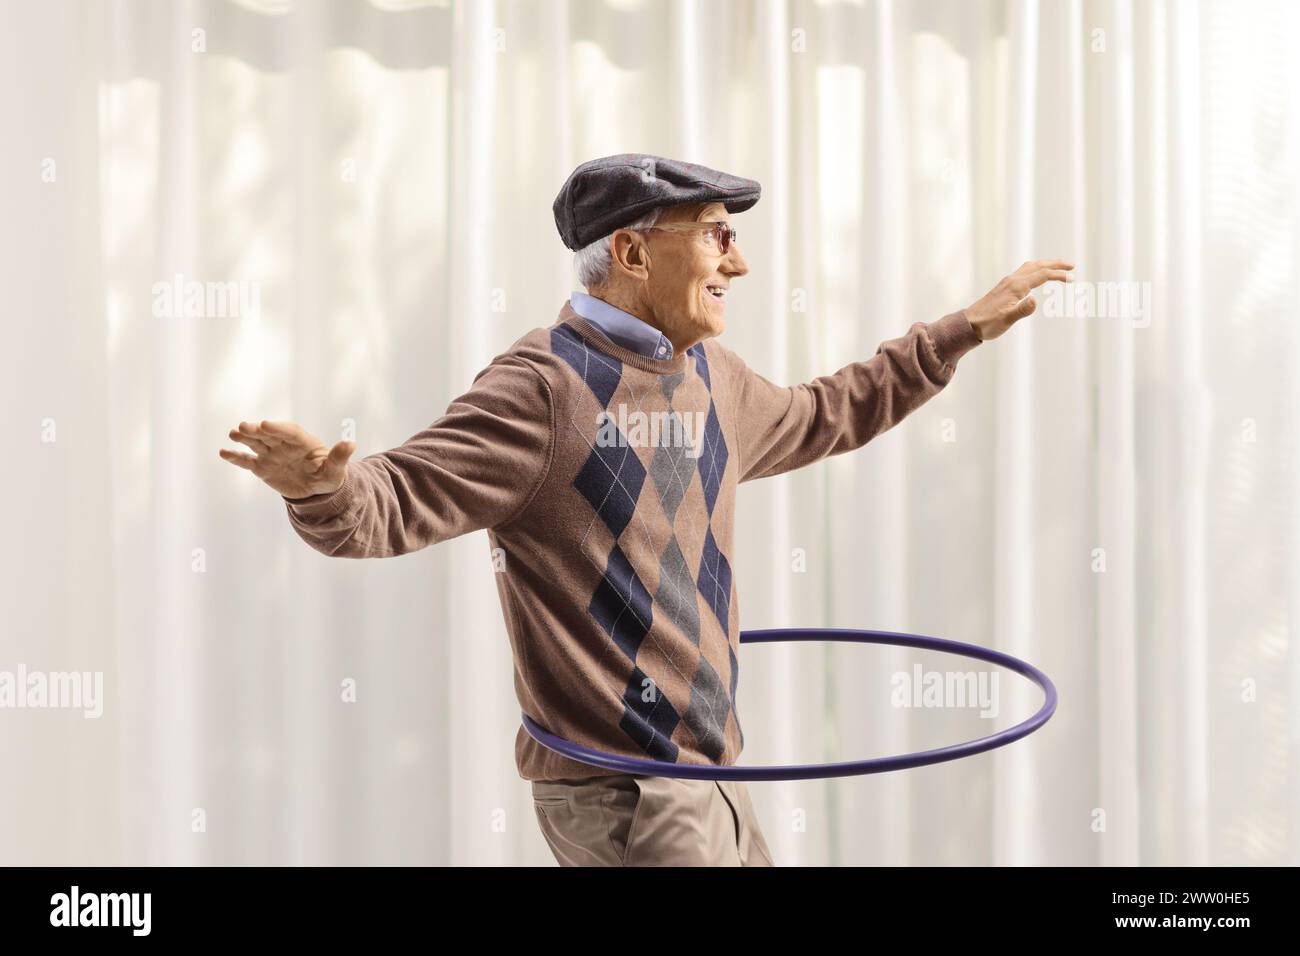 Cheerful elderly man having fun and spinning a hula hoop at home Stock Photo